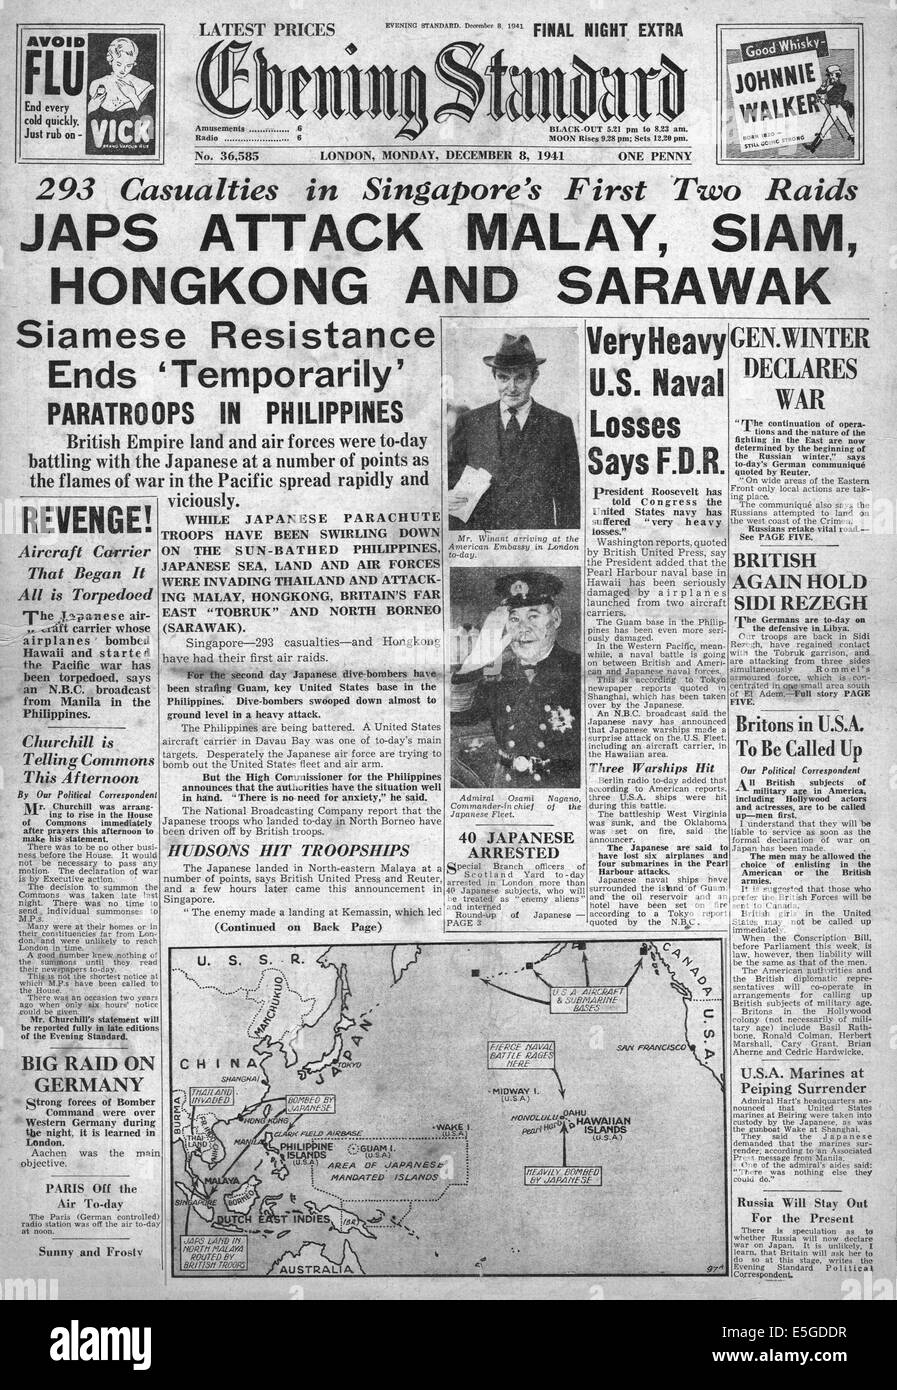 Image result for japanese invade malaya - midnight, dec. 8, 1941 - newspaper